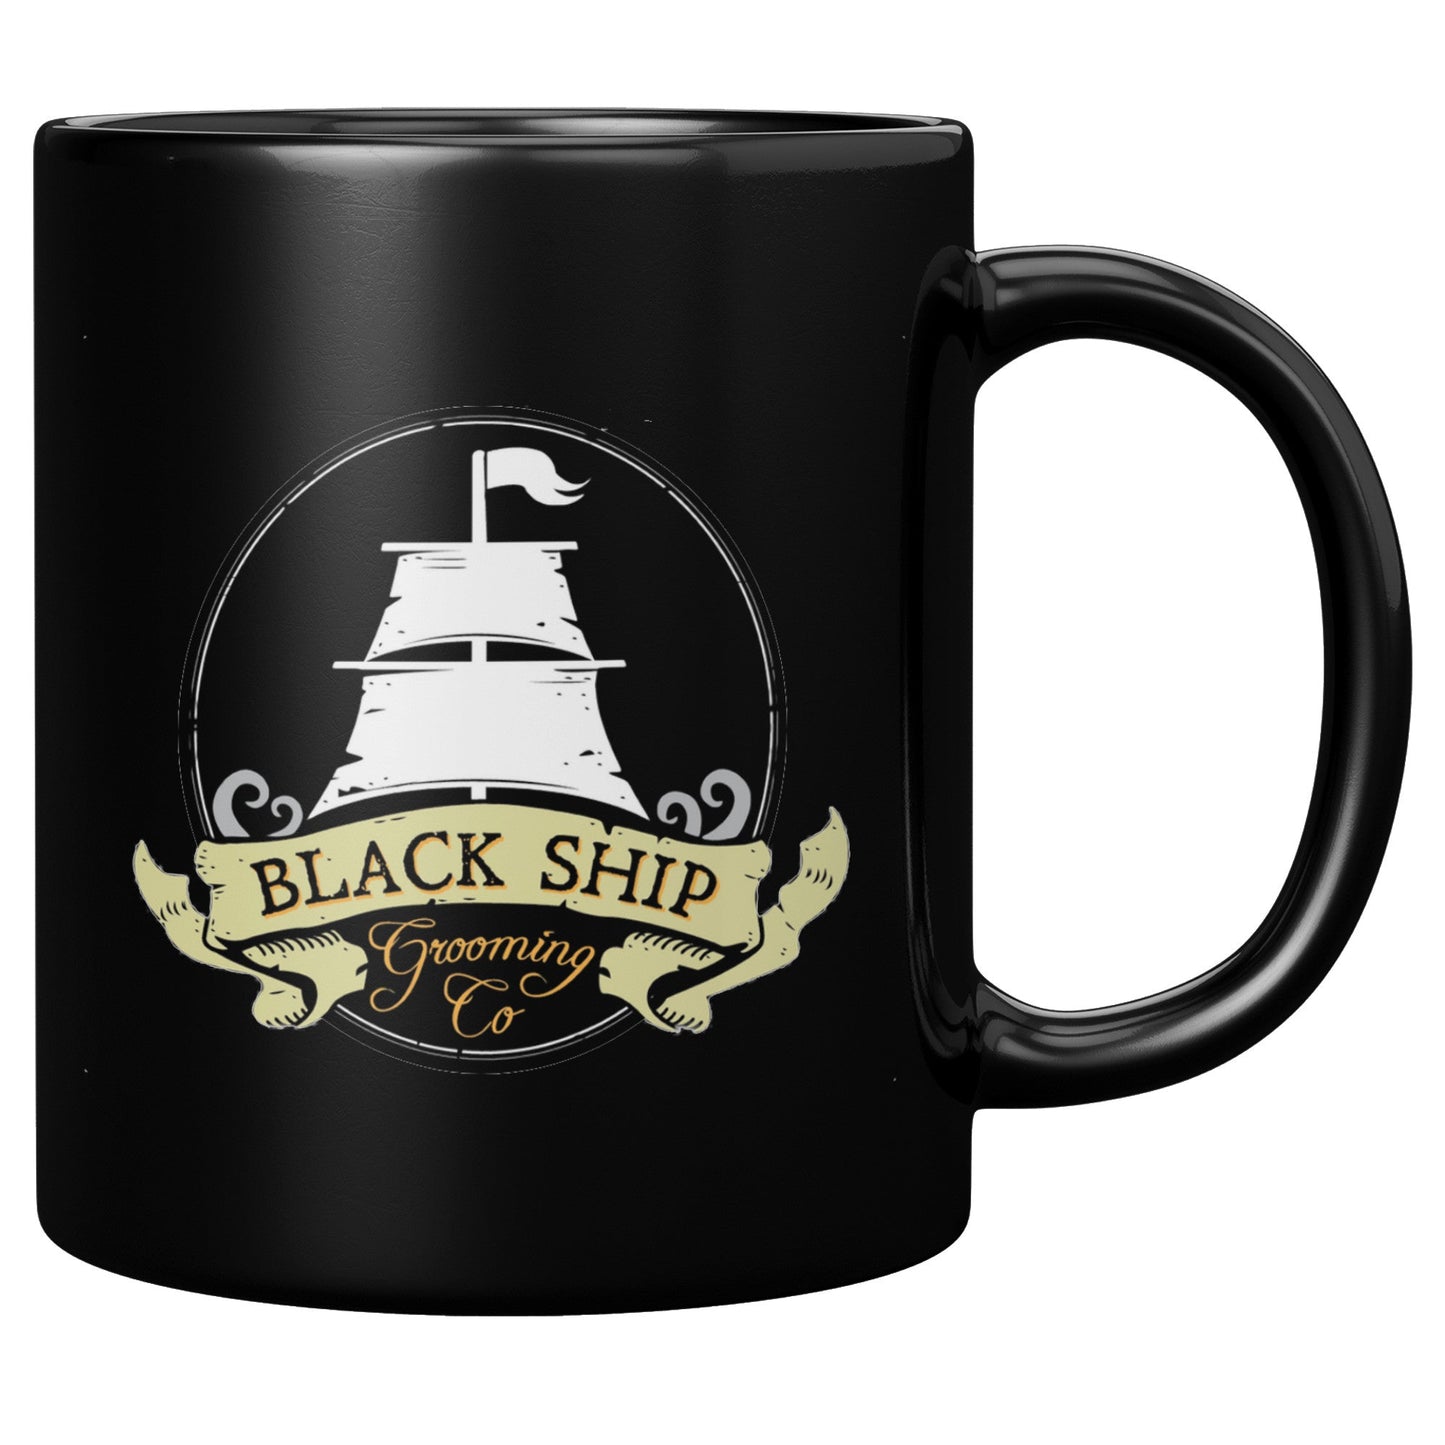 Black Flag Mug - Black Ship Grooming Co.